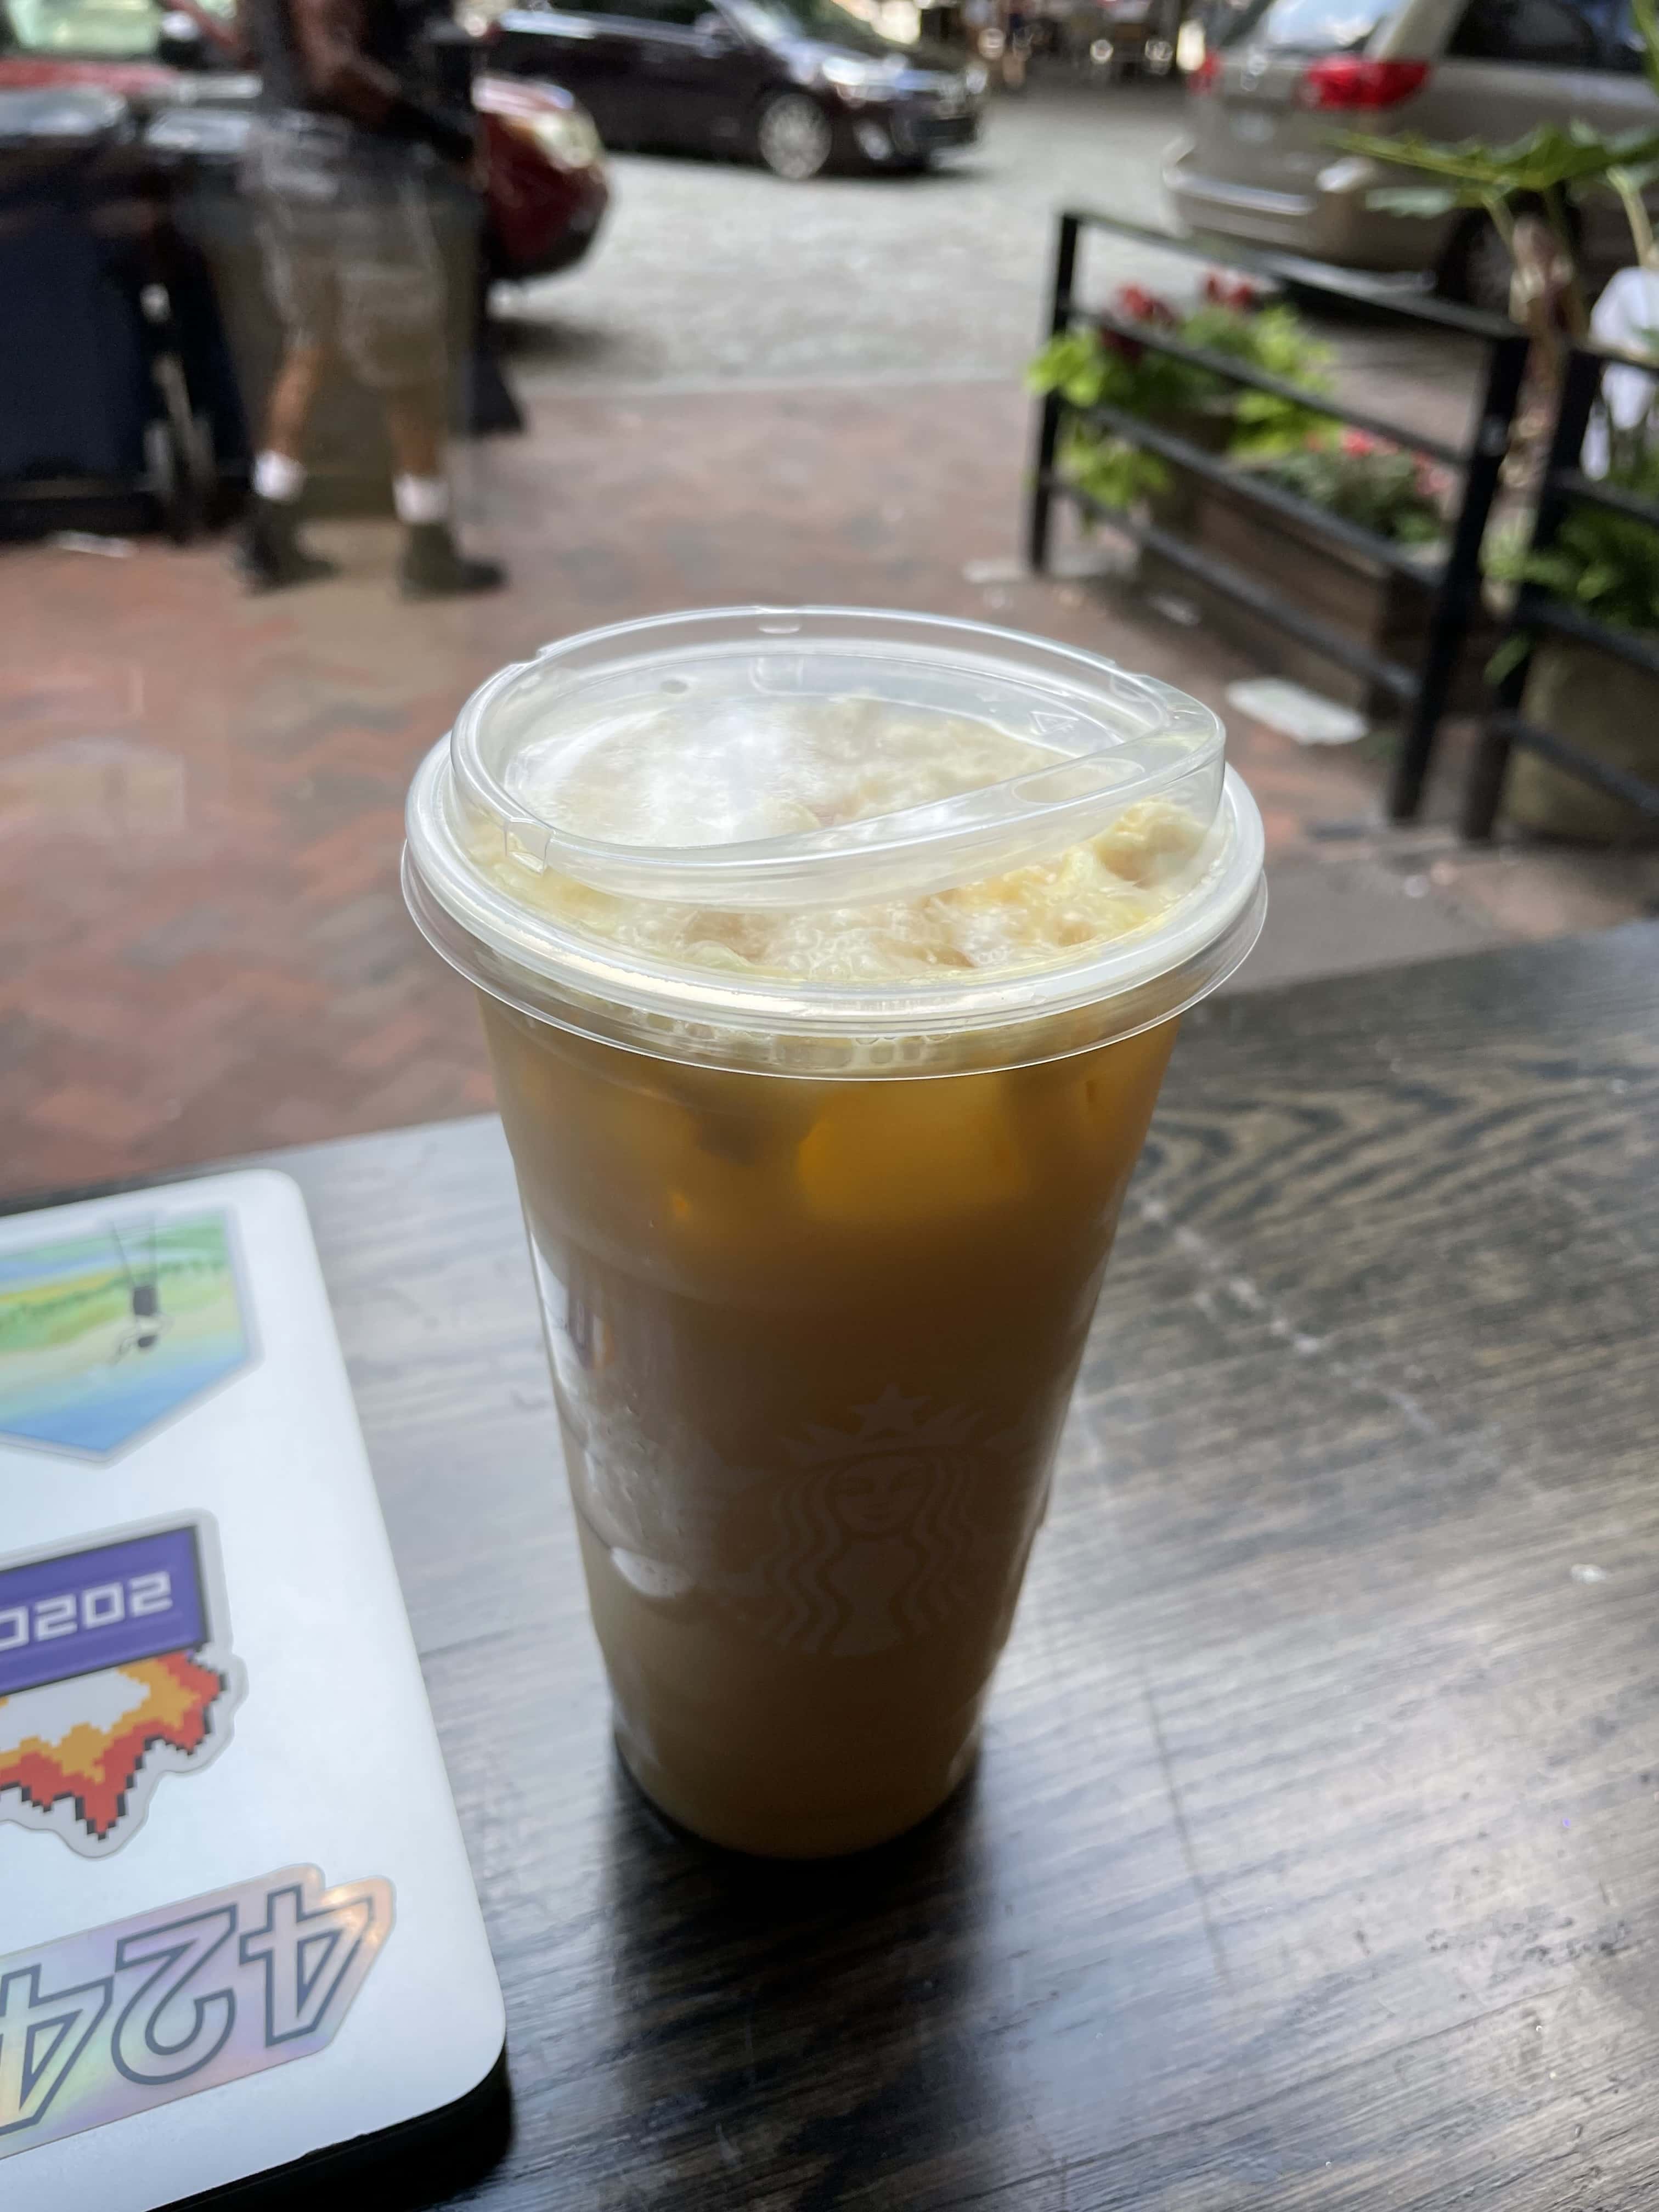 The Starbucks Pineapple Passionfruit Refresher isn’t bad, but not fantastic.